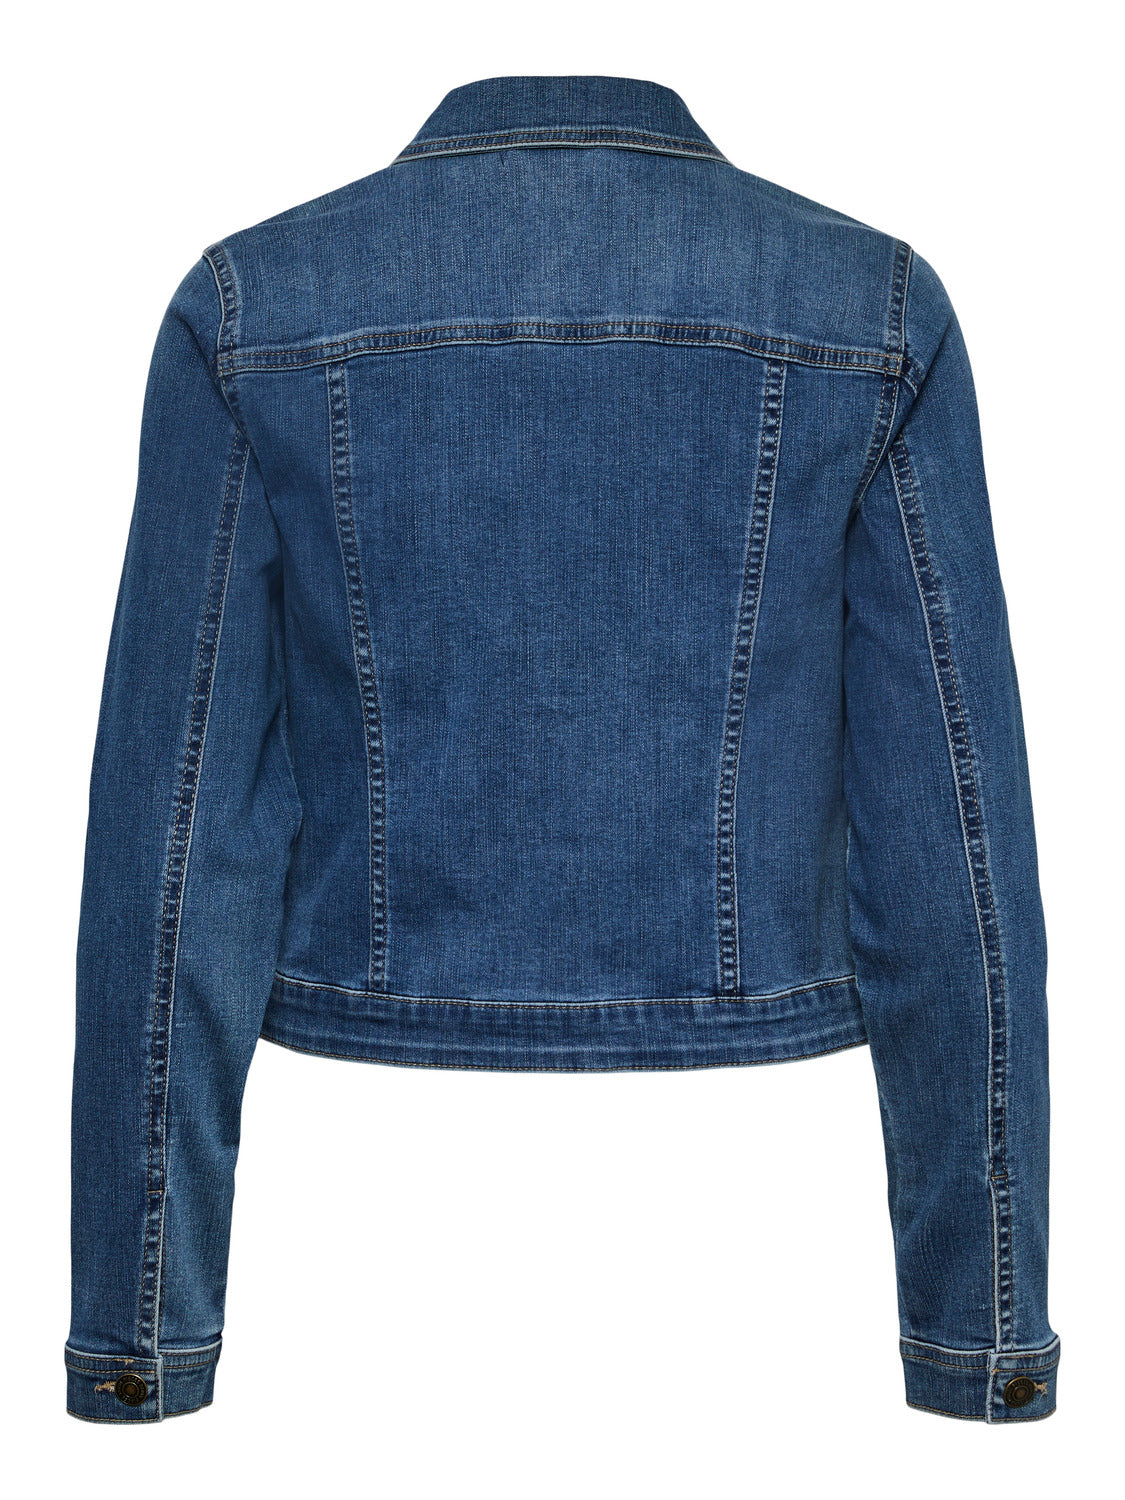 PCOIA Jacket - Medium Blue Denim